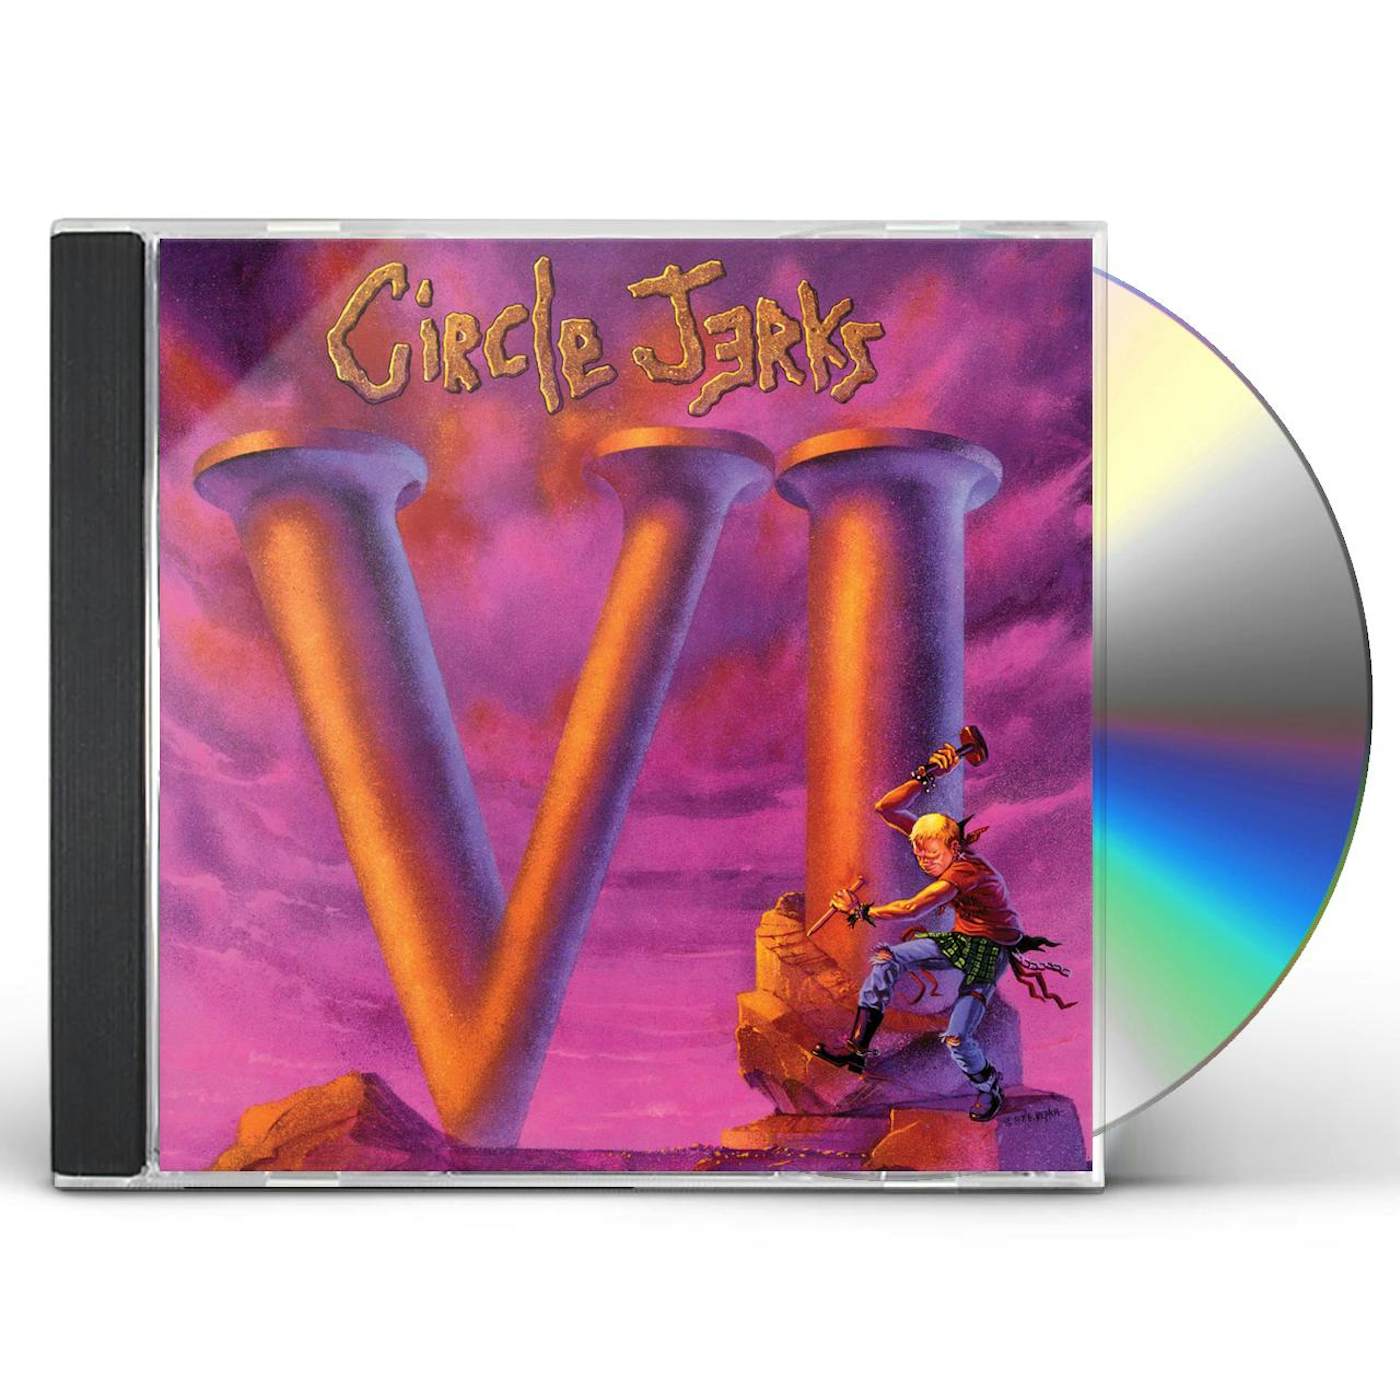 Circle Jerks VI CD